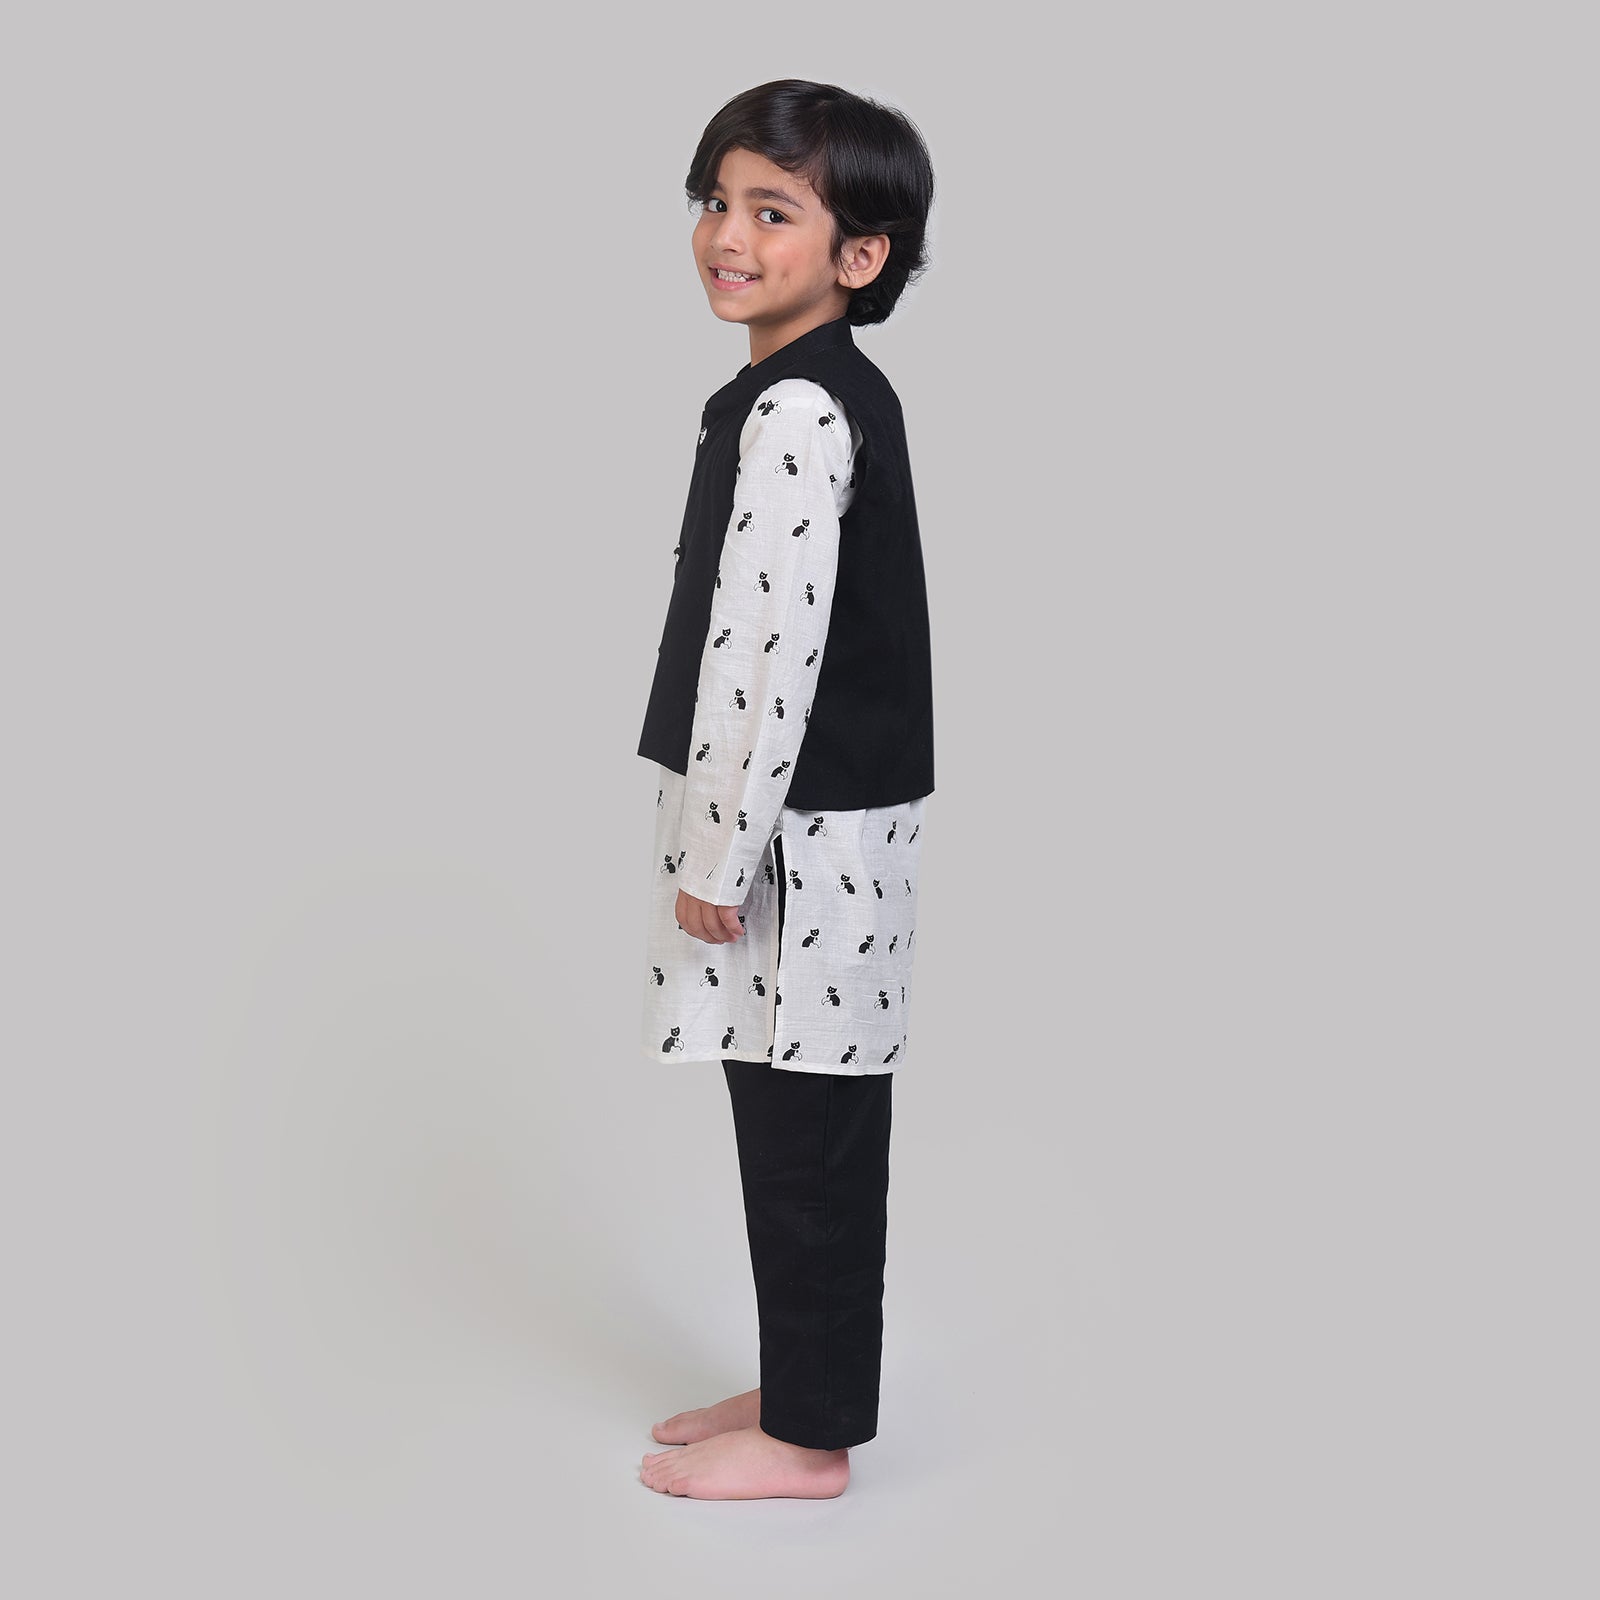 Cotton Nehru Jacket with Kurta Pajama Set with Bell The Cat Print